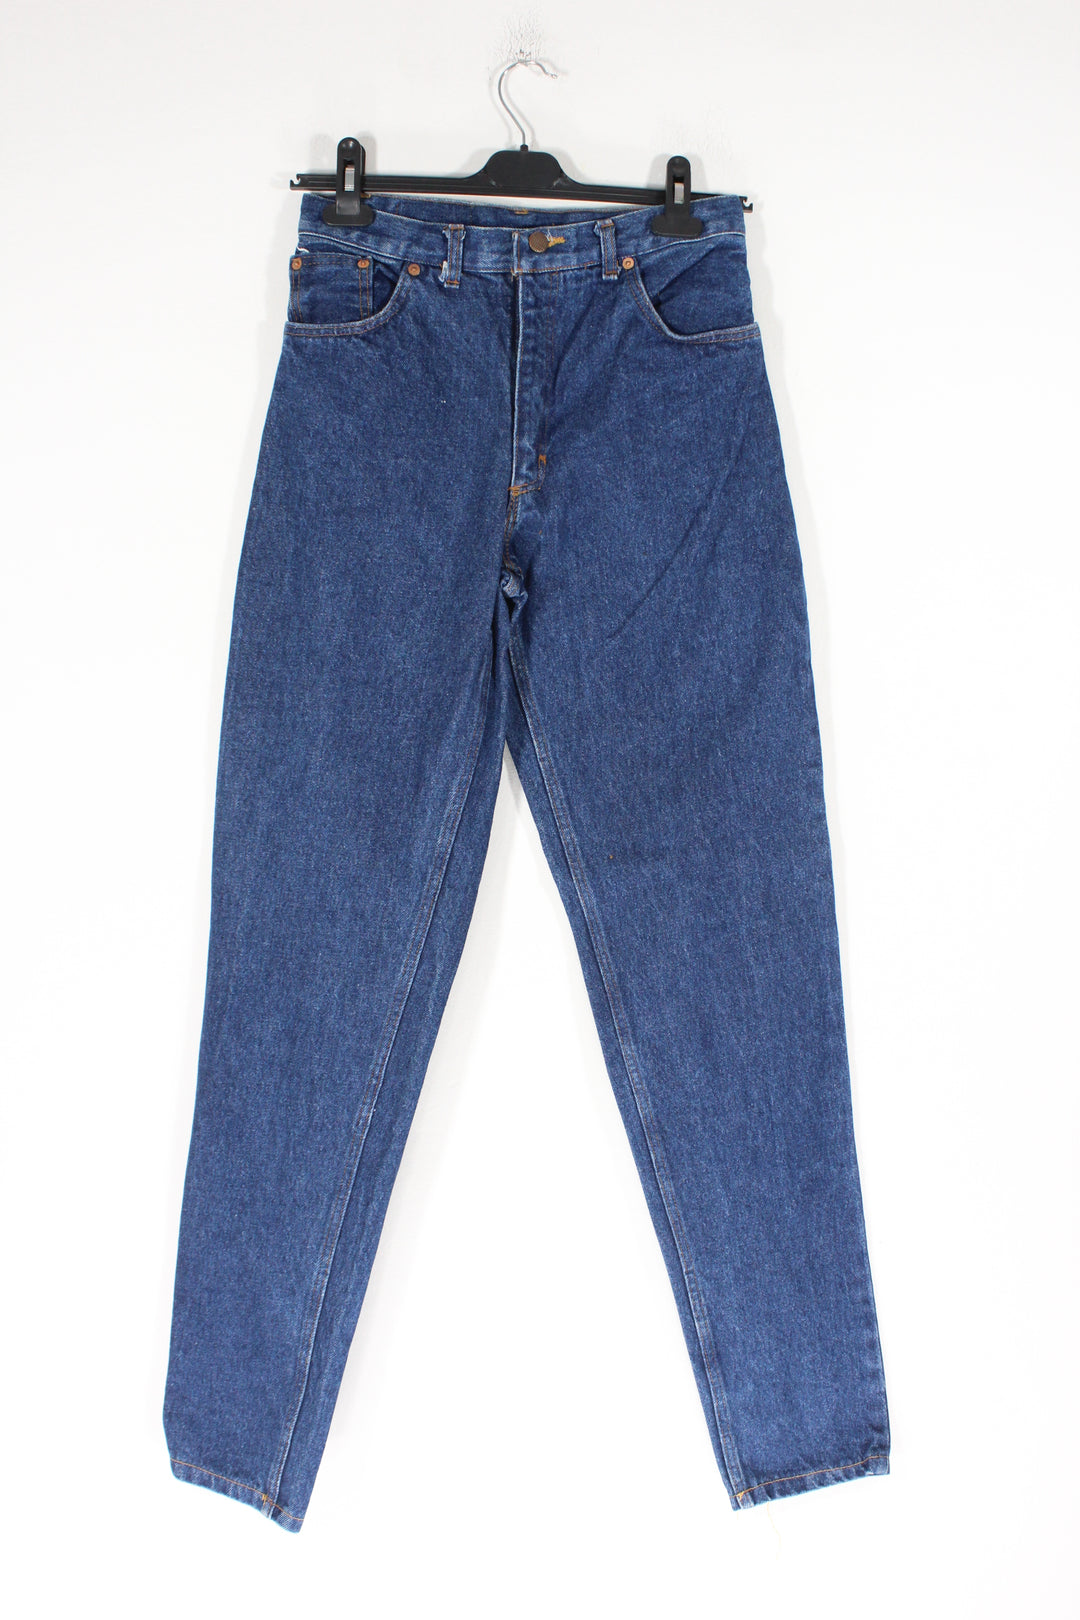 Americanino High Waisted Jeans Women's Medium(36)